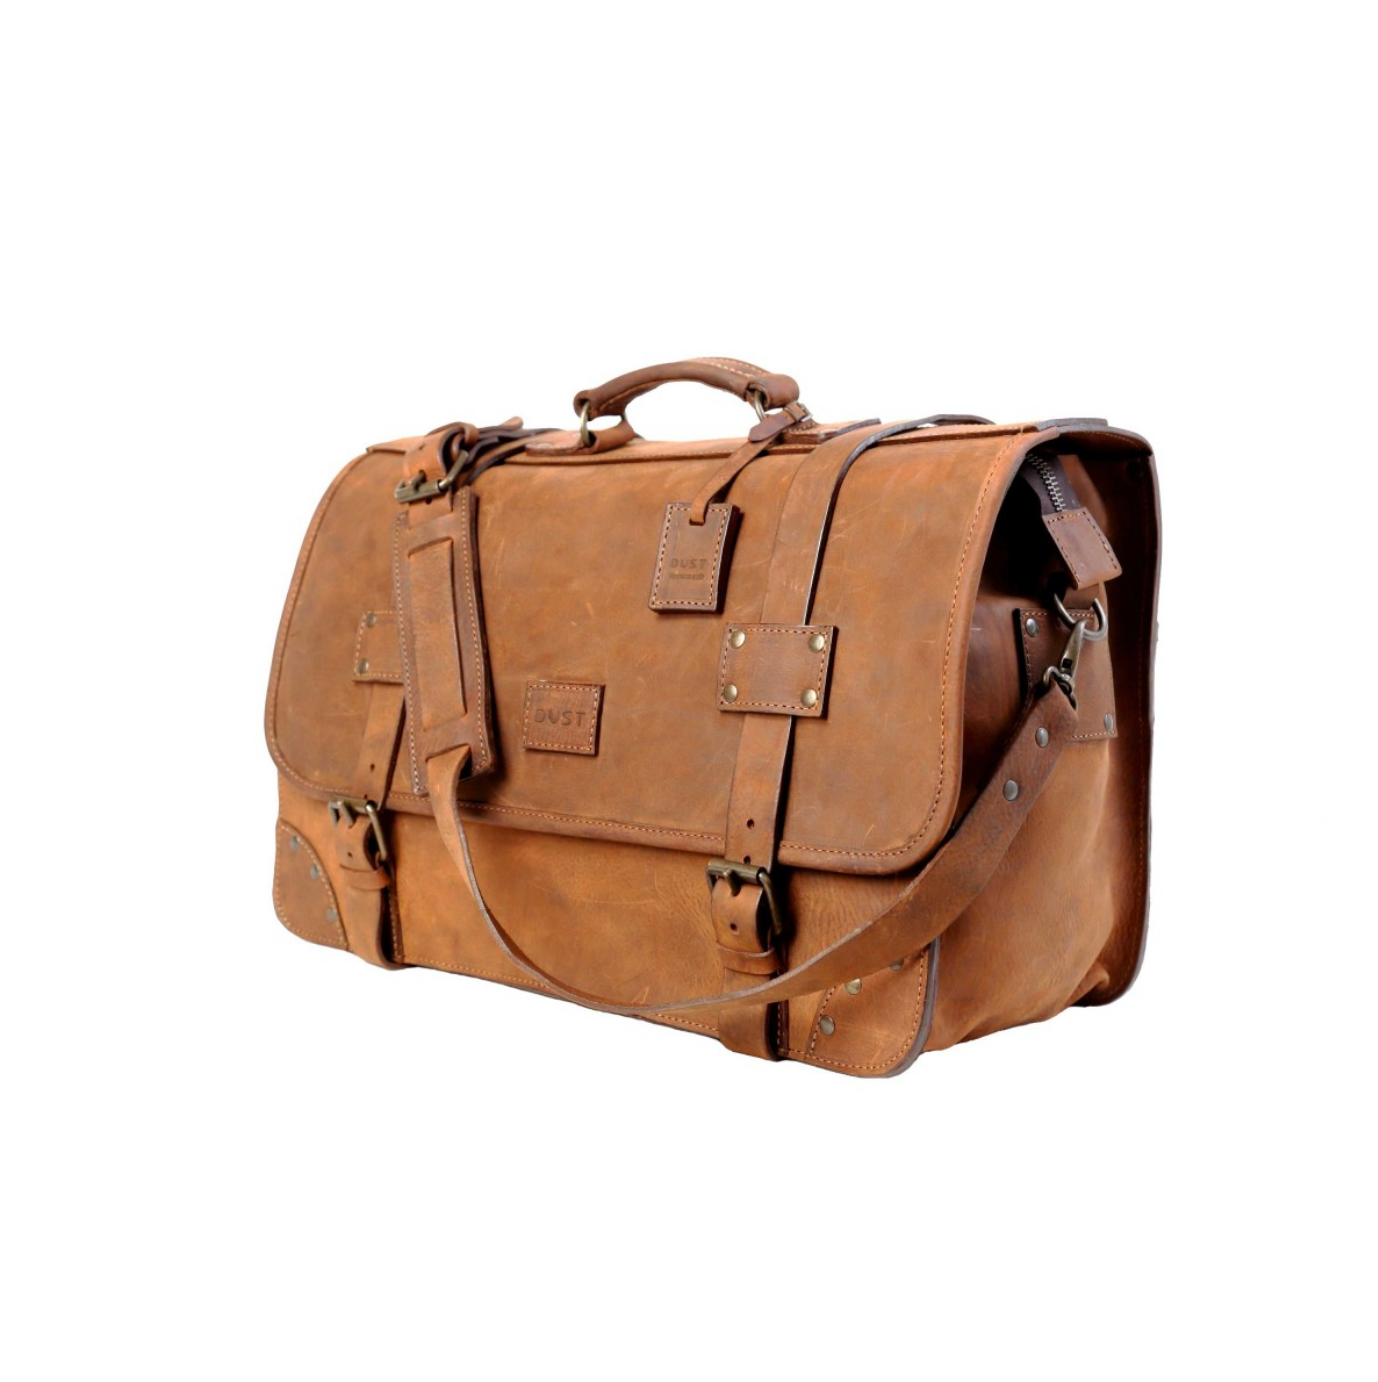 Mod 118 Travel Bag Heritage Brown